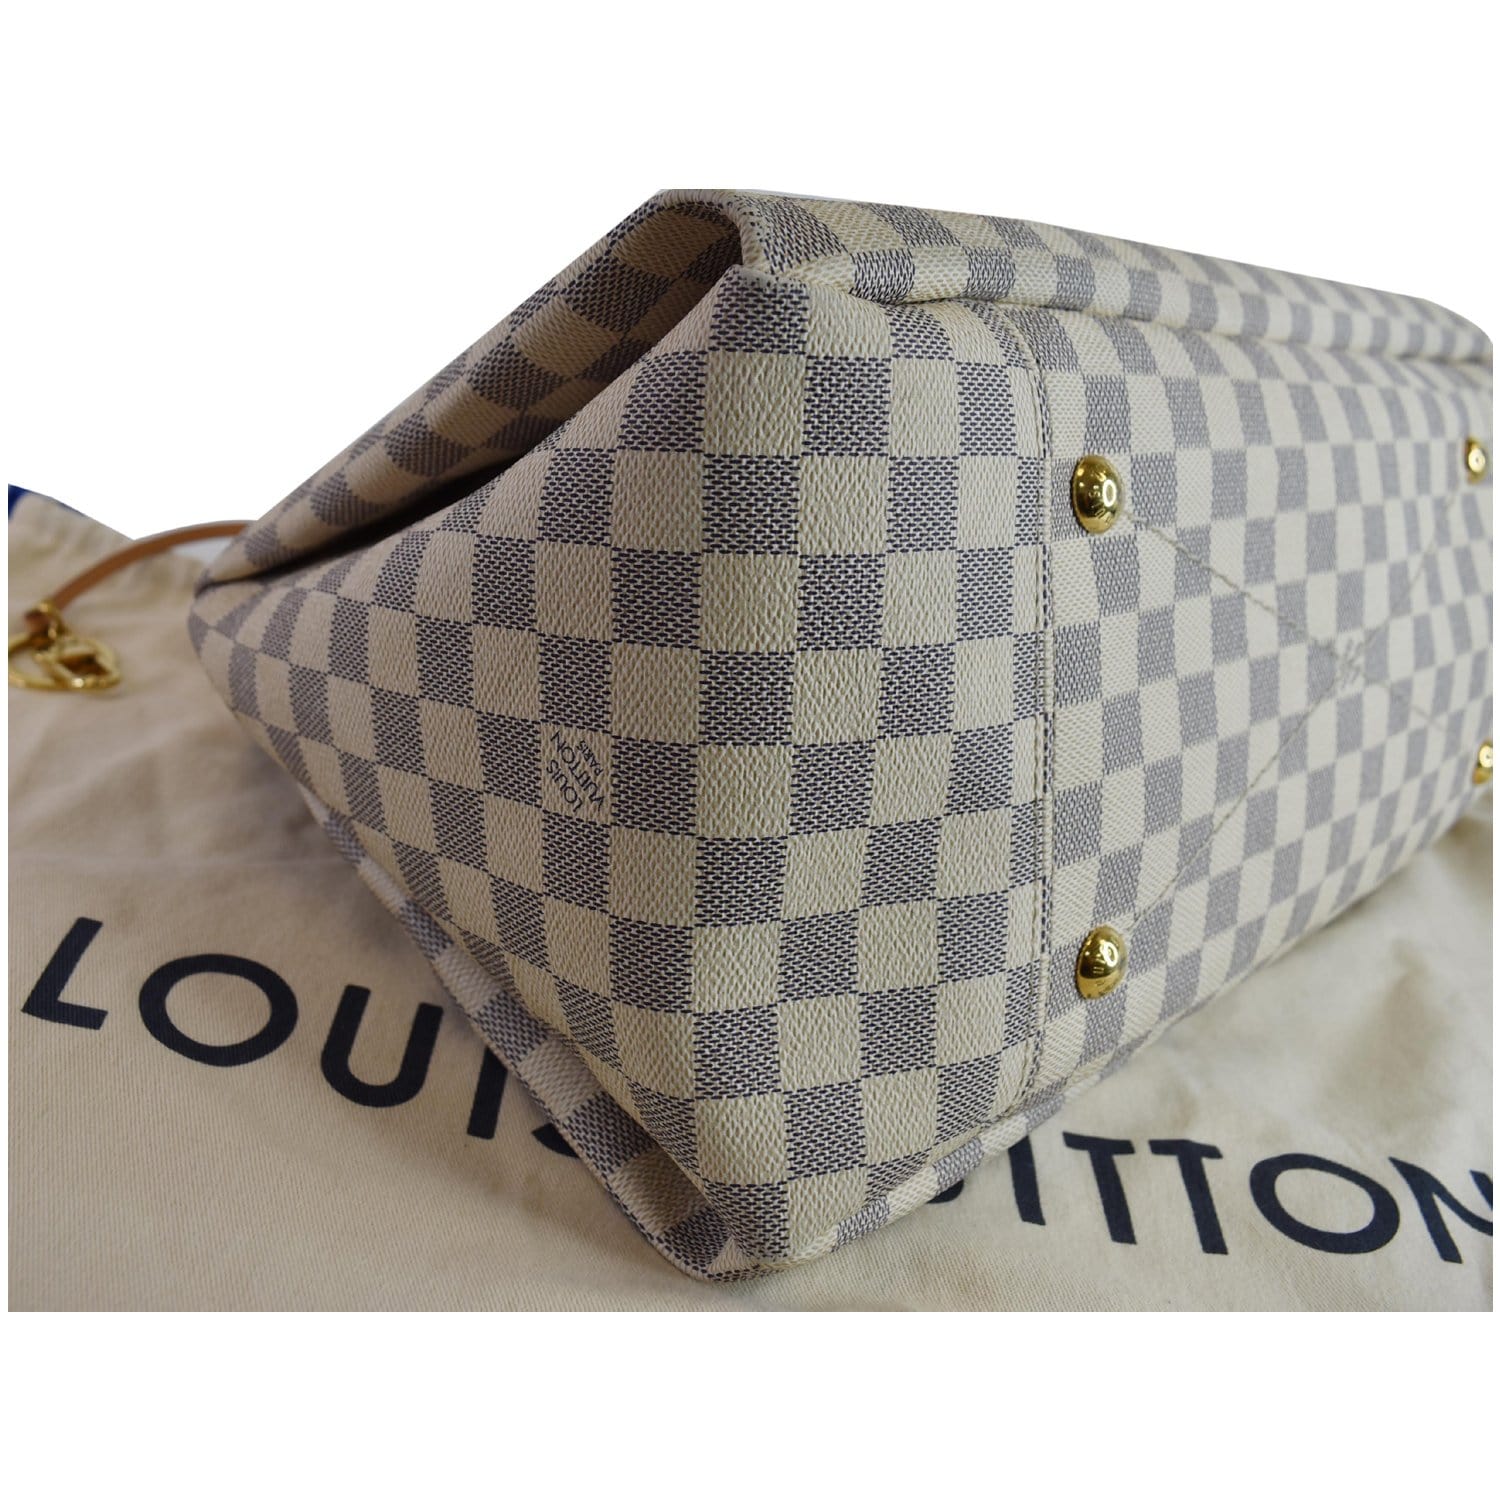 Louis Vuitton 2014 pre-owned Damier Azur Artsy MM Handbag - Farfetch